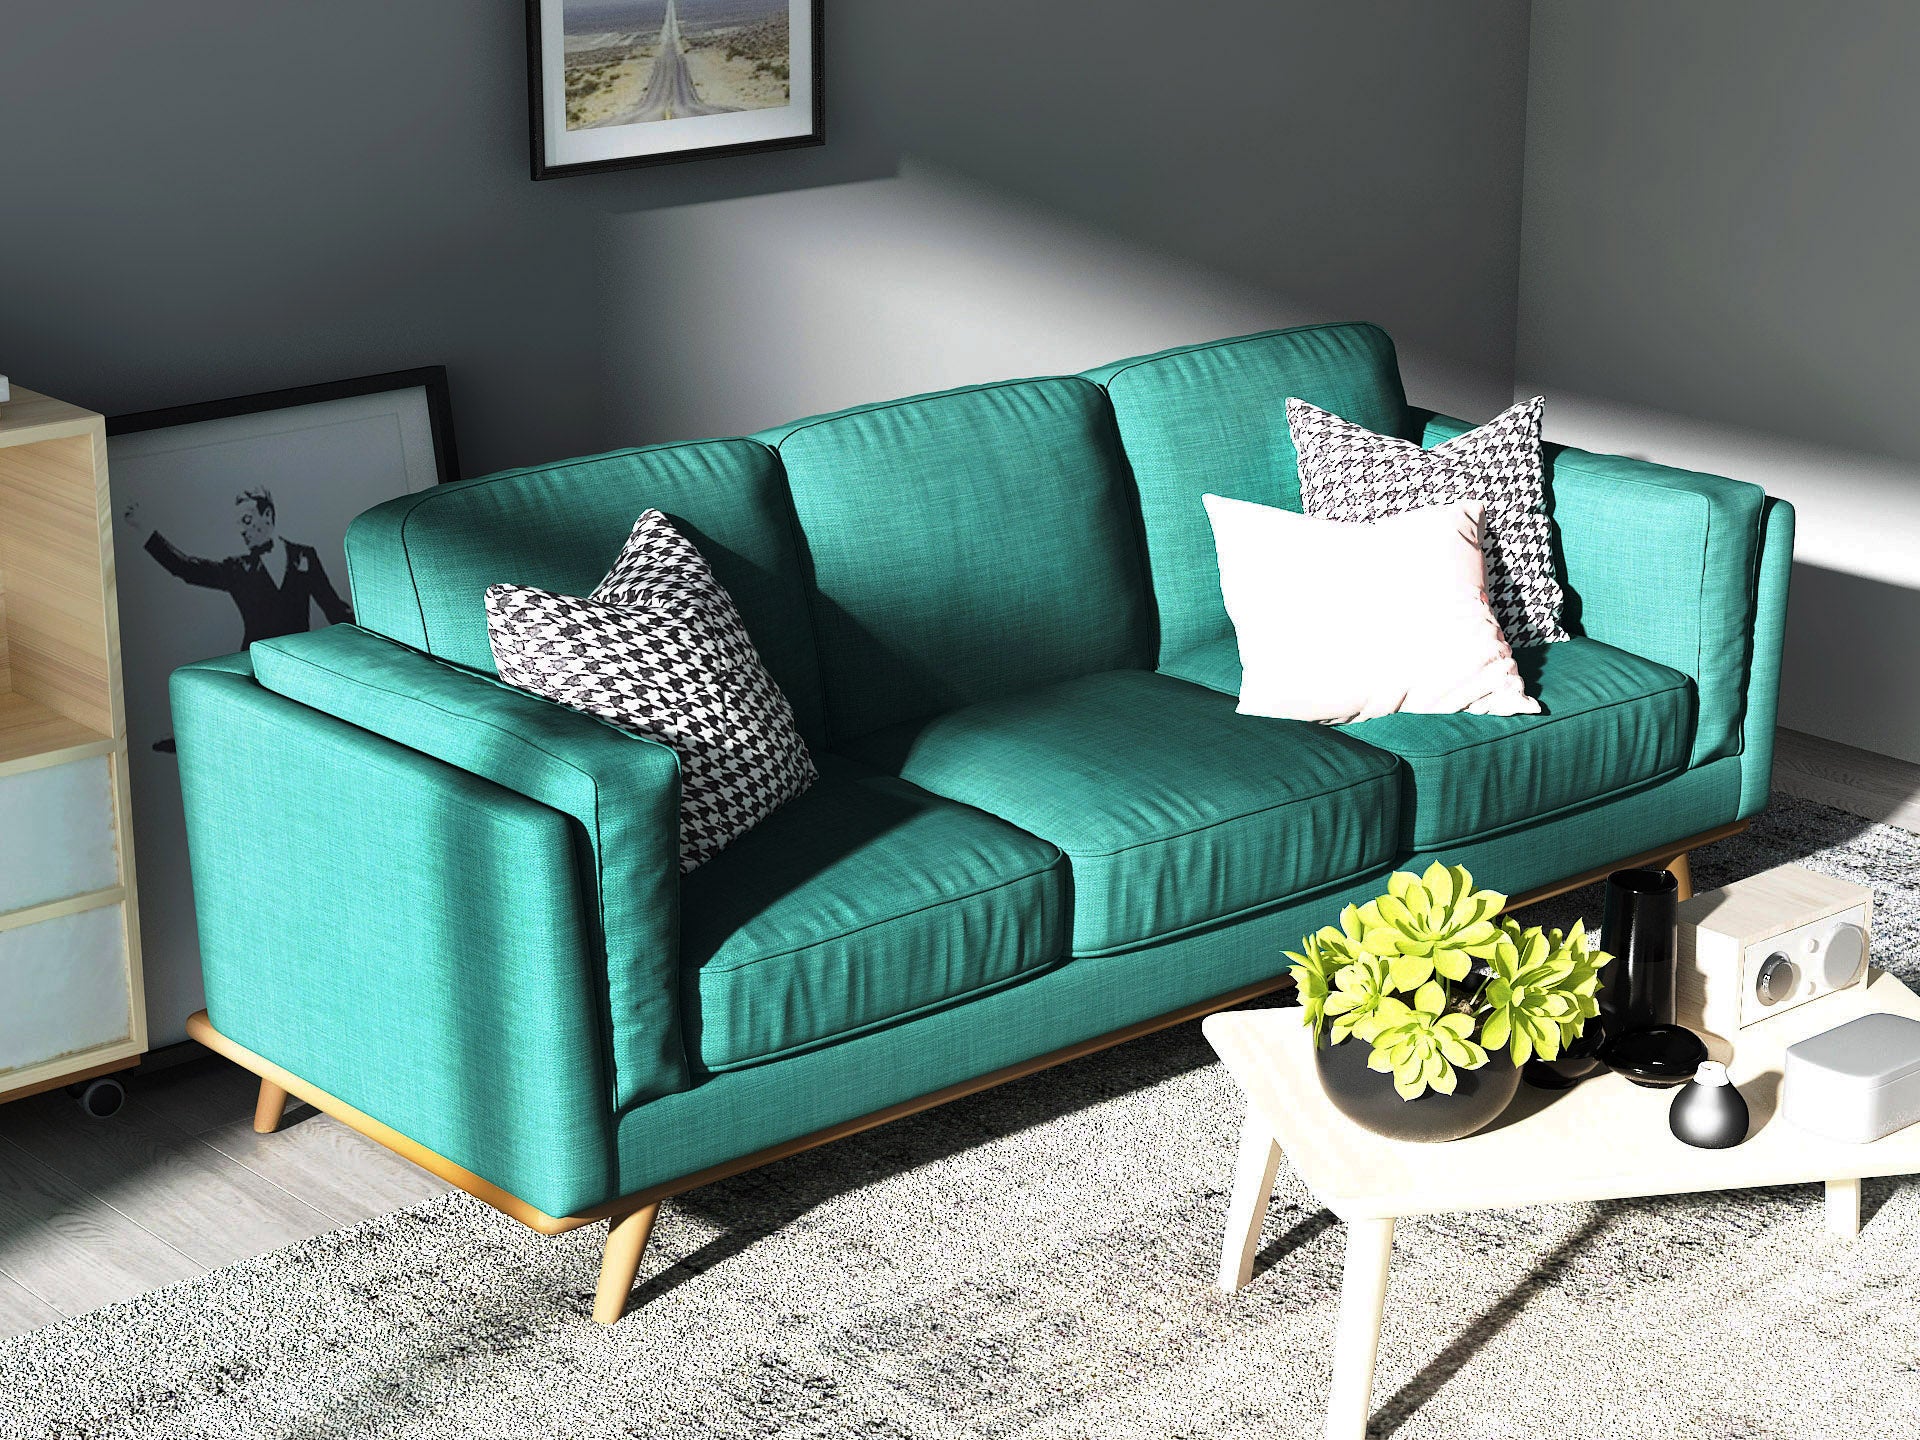 York 3 Seater Fabric Armchair Sofa Modern Lounge in Teal Colour